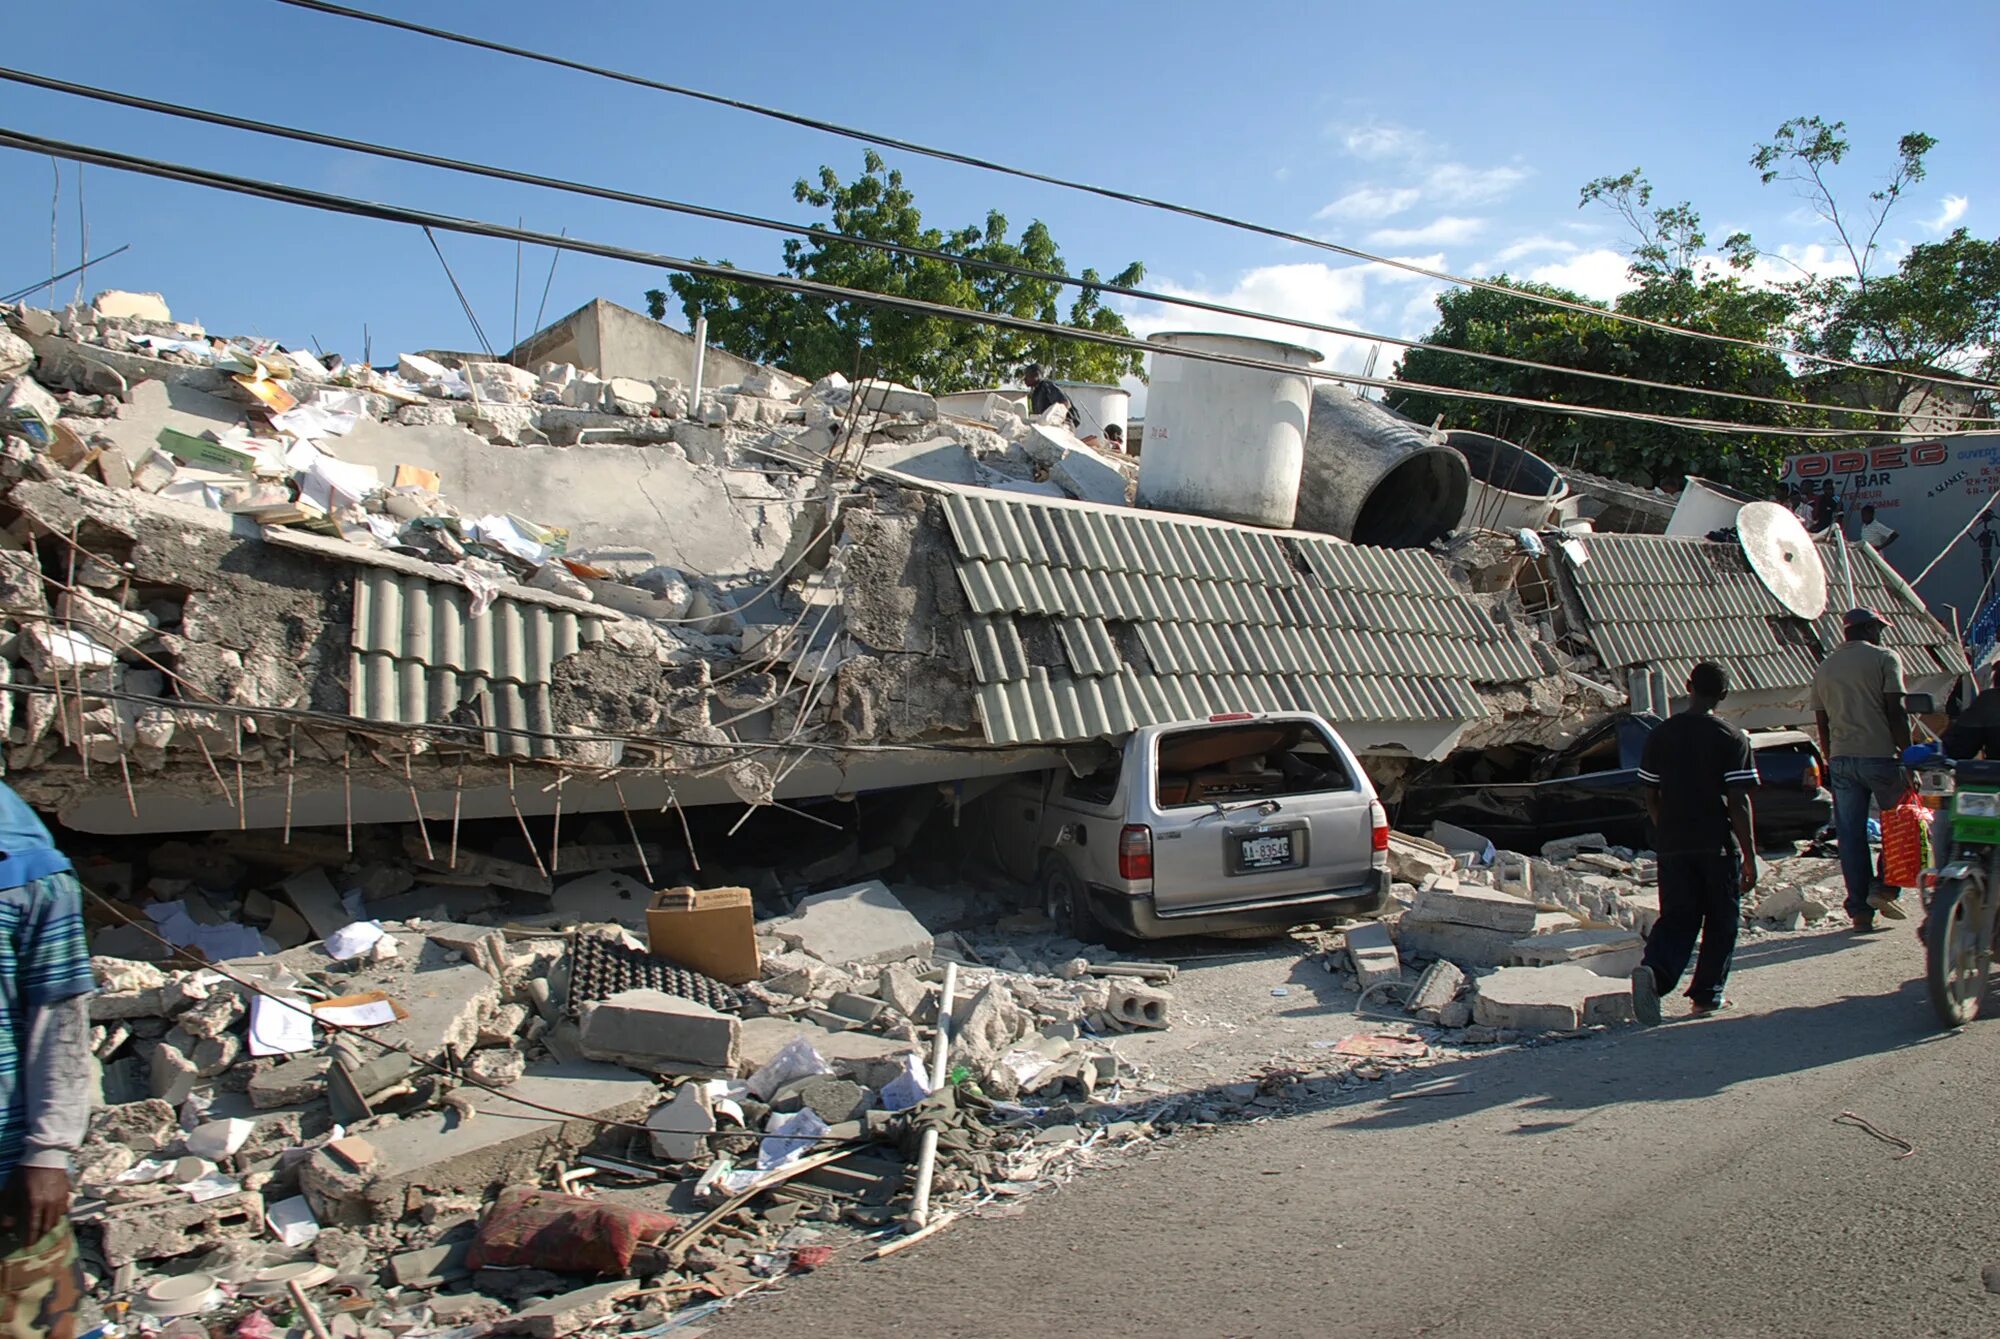 In 2010 a terrible earthquake hit